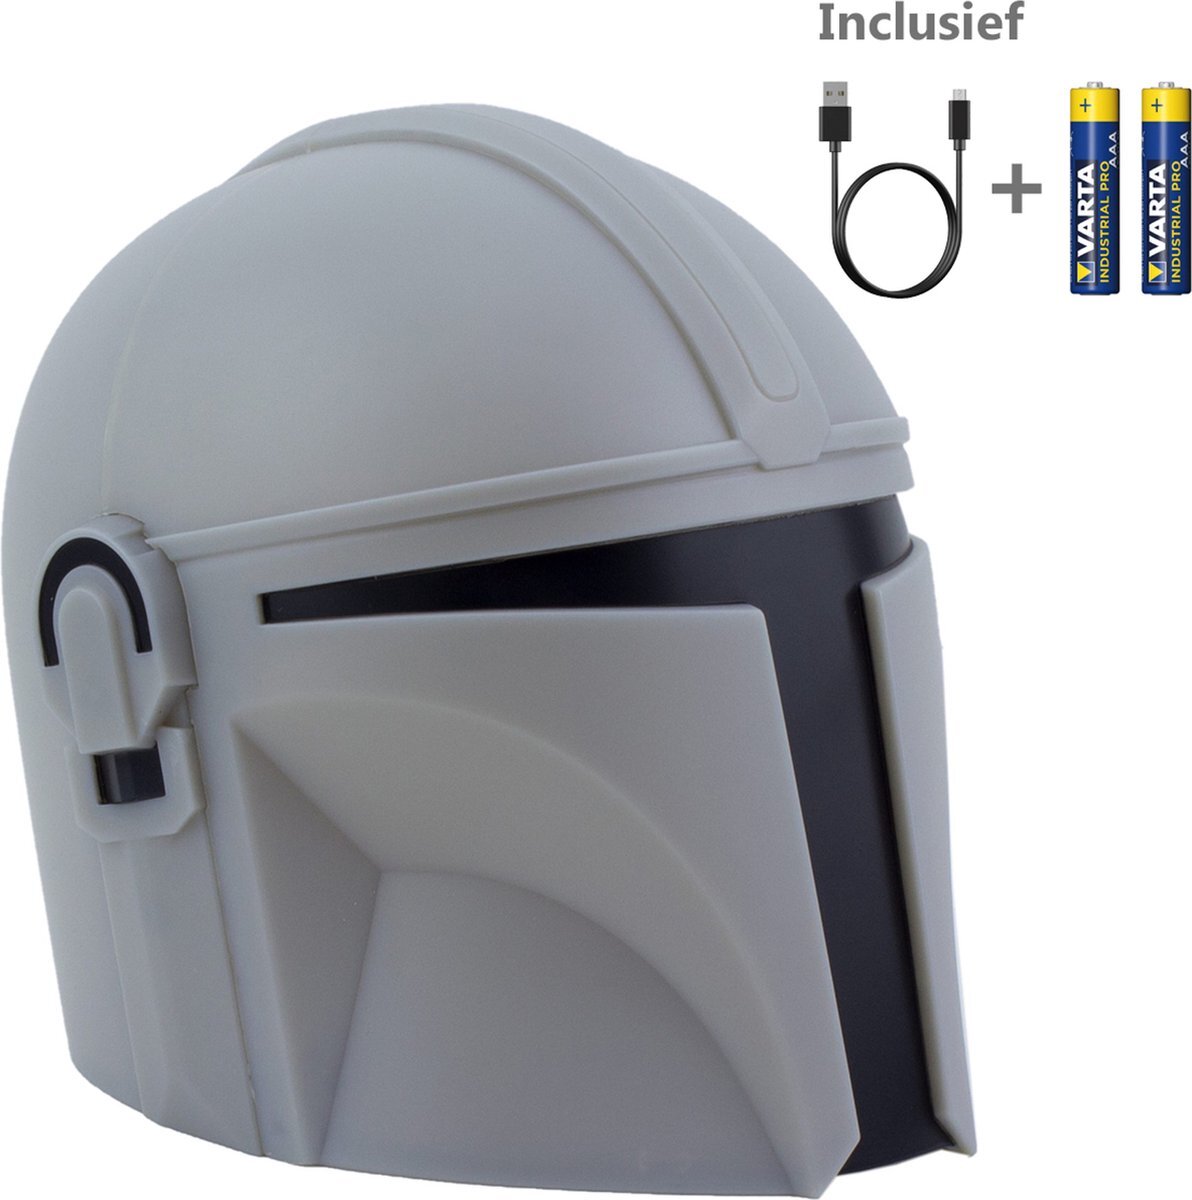 Paladone Star Wars - The Mandalorian Desktop Lamp - Incl. USB kabel + 2 AAA Batterijen